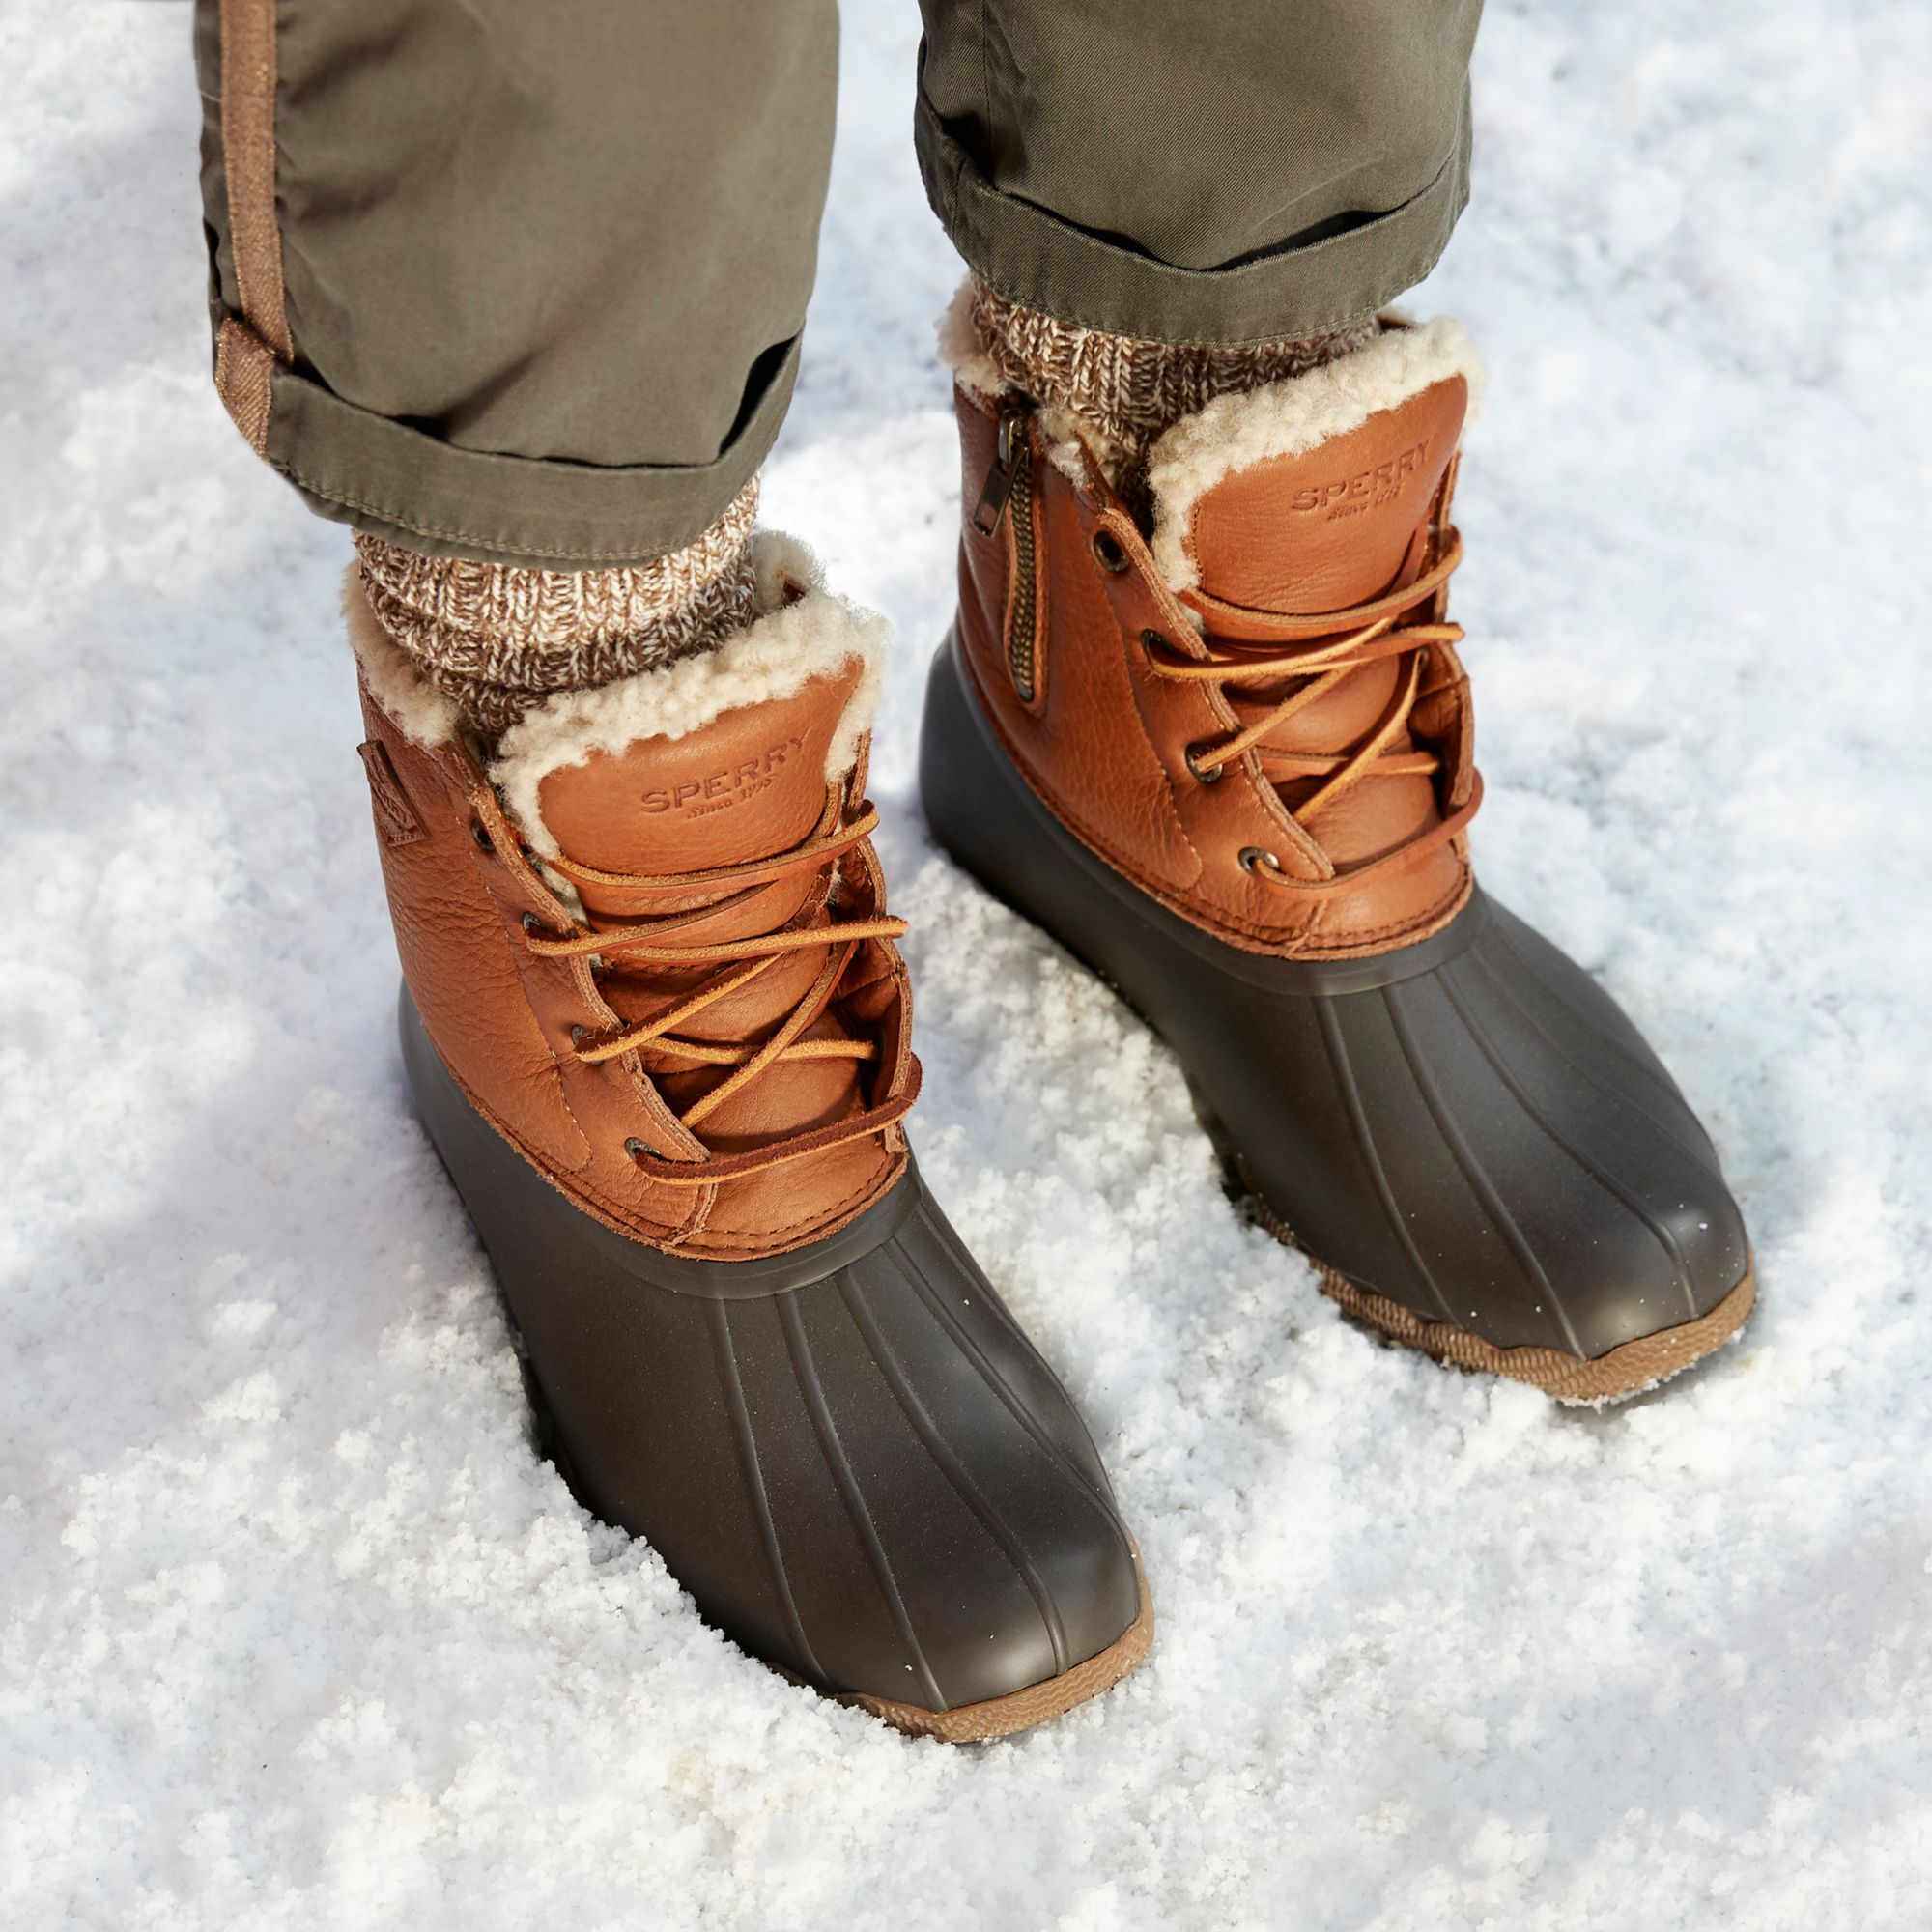 sperry duck boots winter